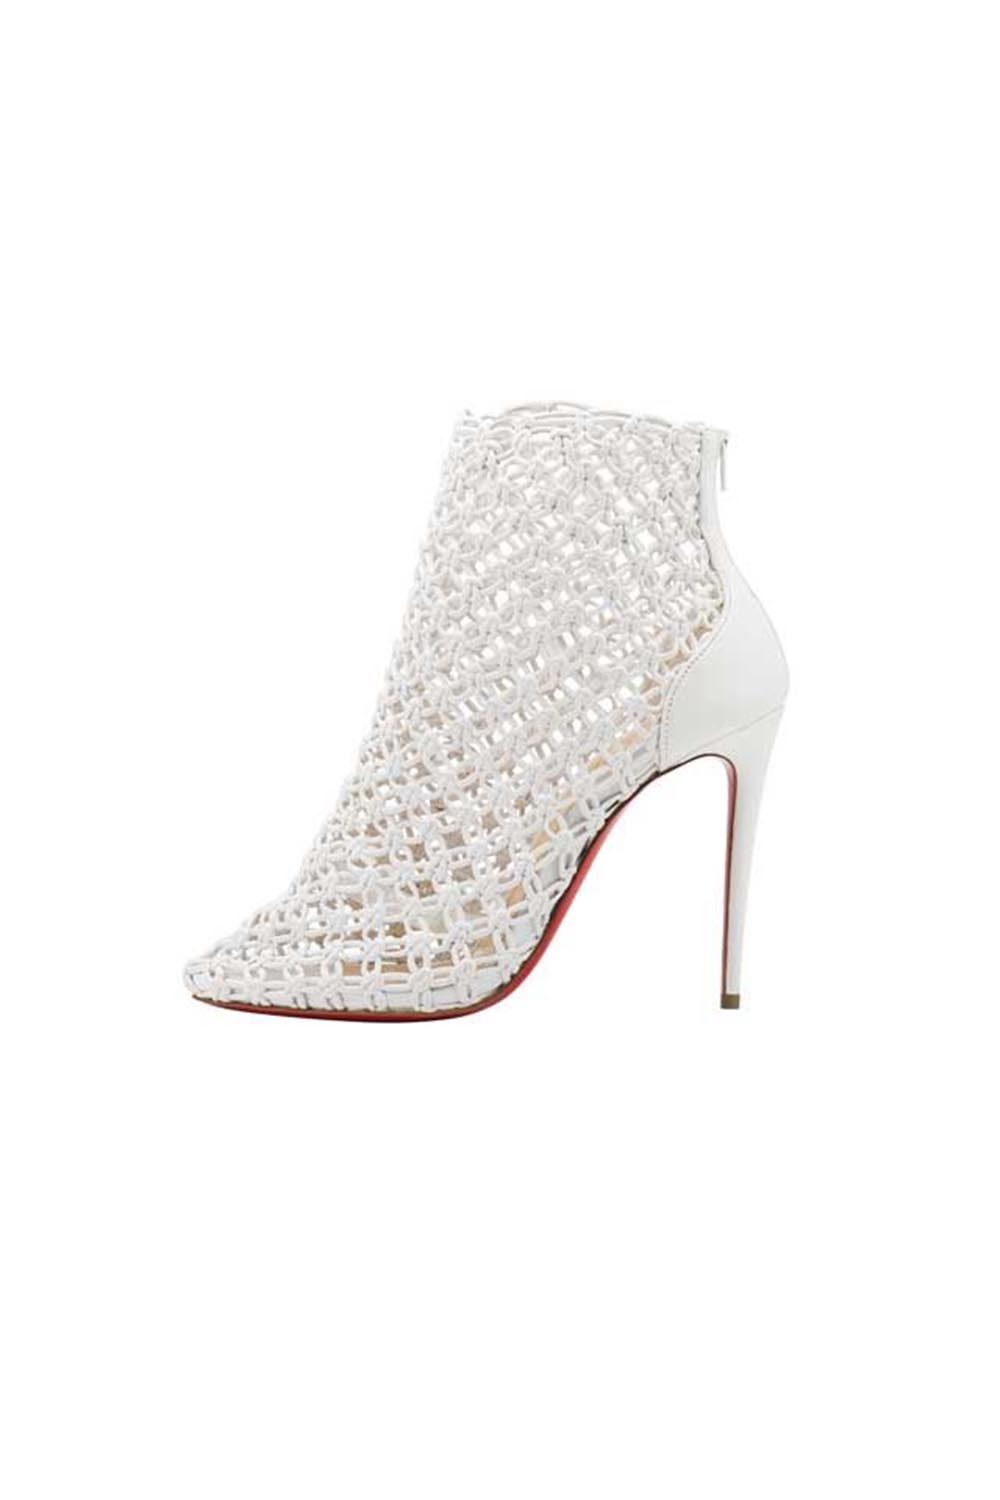 Christian Louboutin bridal shoe collection